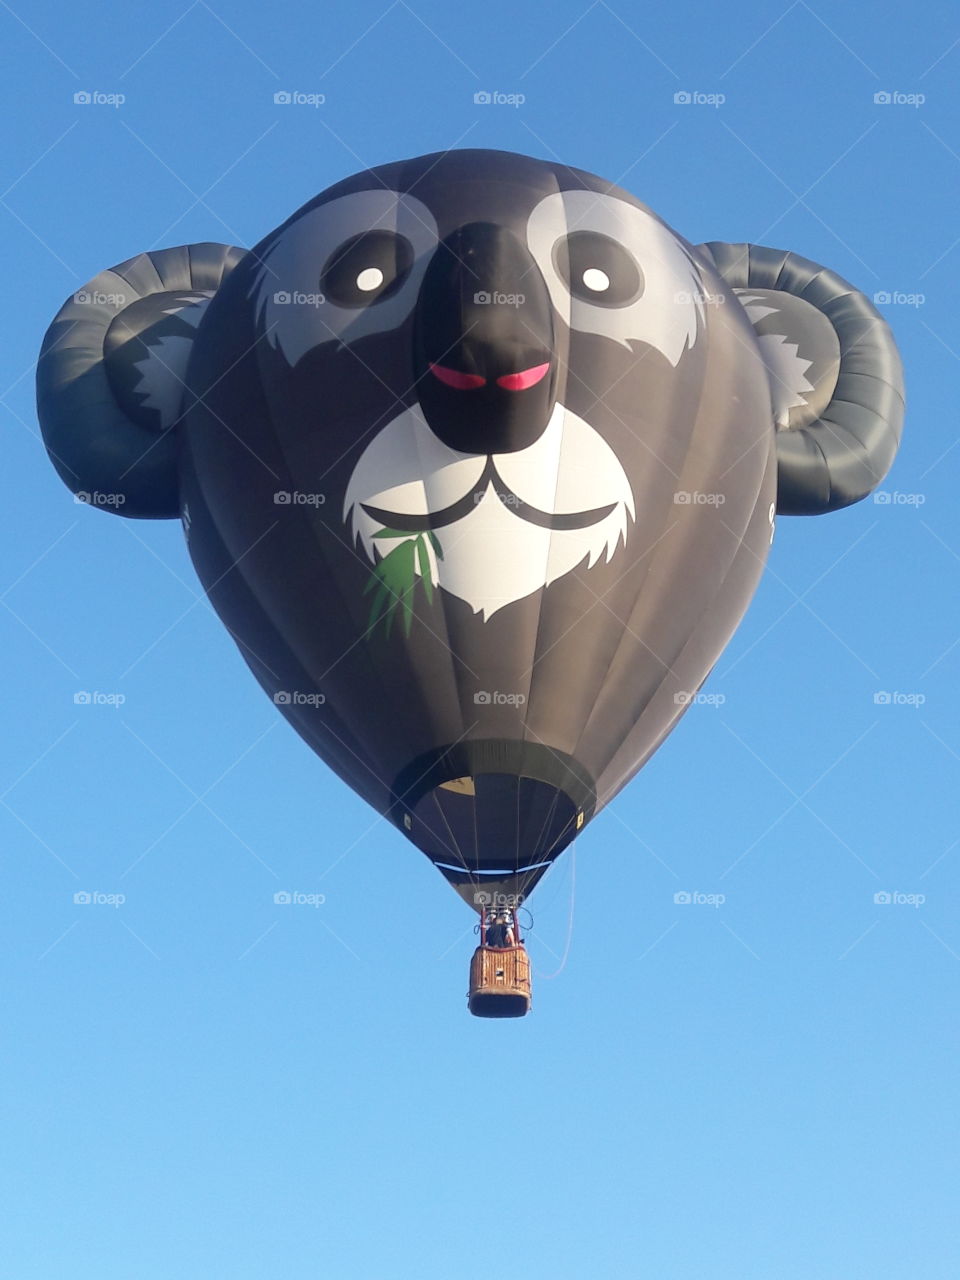 koala hot air balloon